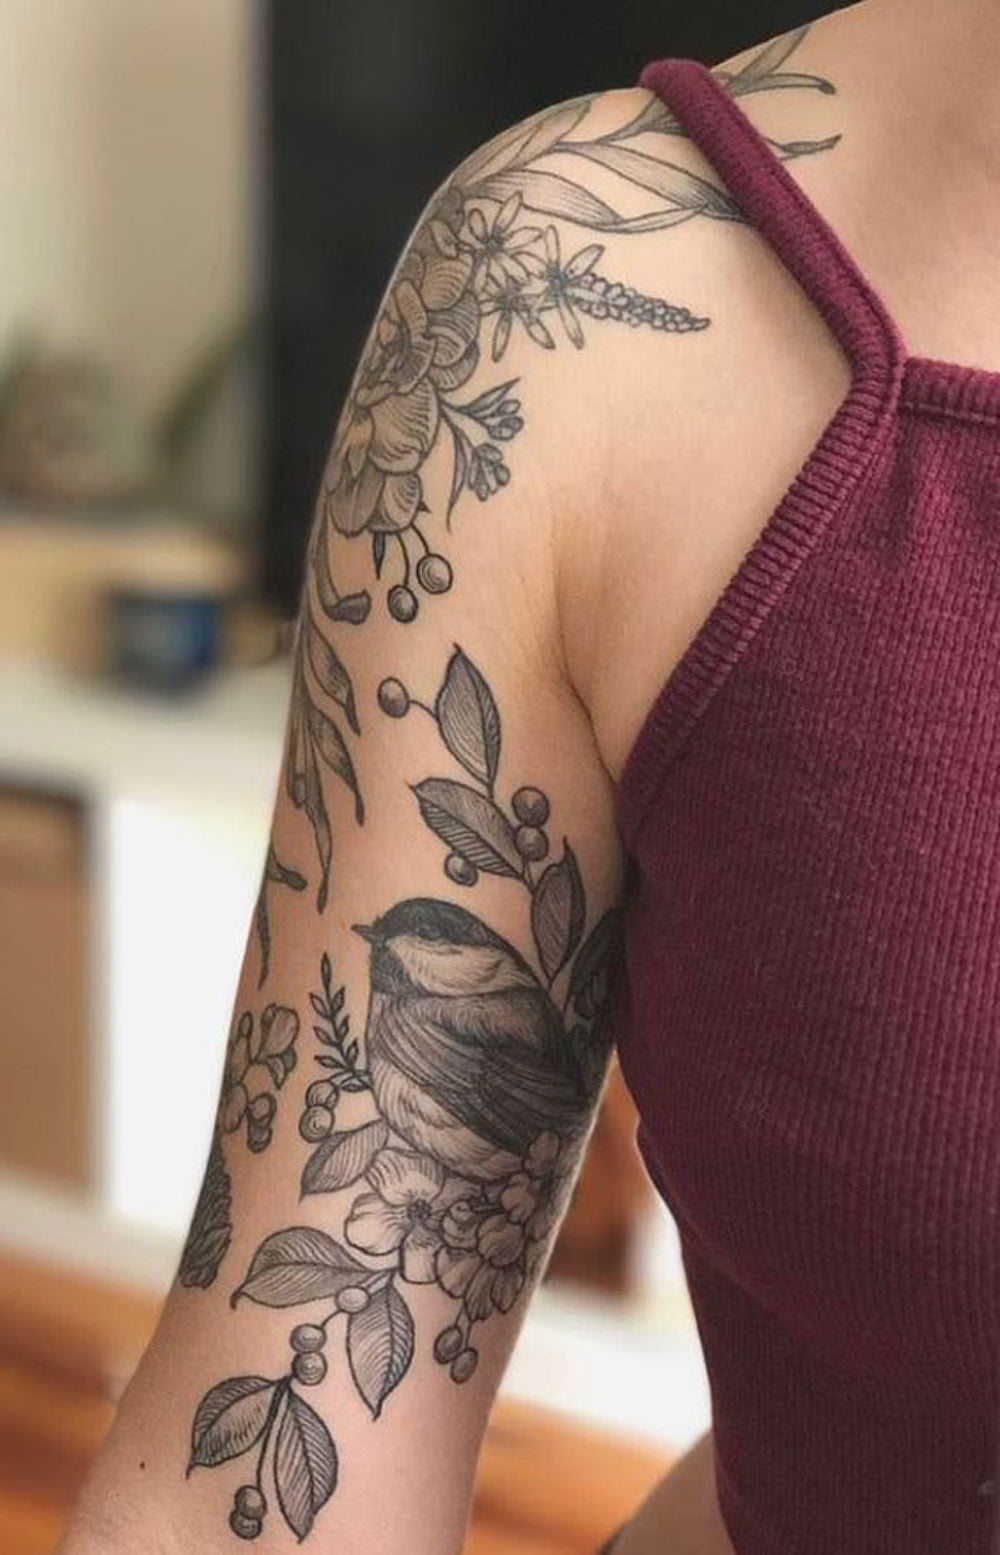 Girly Black Floral Flower Arm Sleeve Tattoo Ideas for Women - Feminine Rose Shoulder Tat - ideas florales negras del tatuaje del hombro para las mujeres - www.MyBodiArt.com